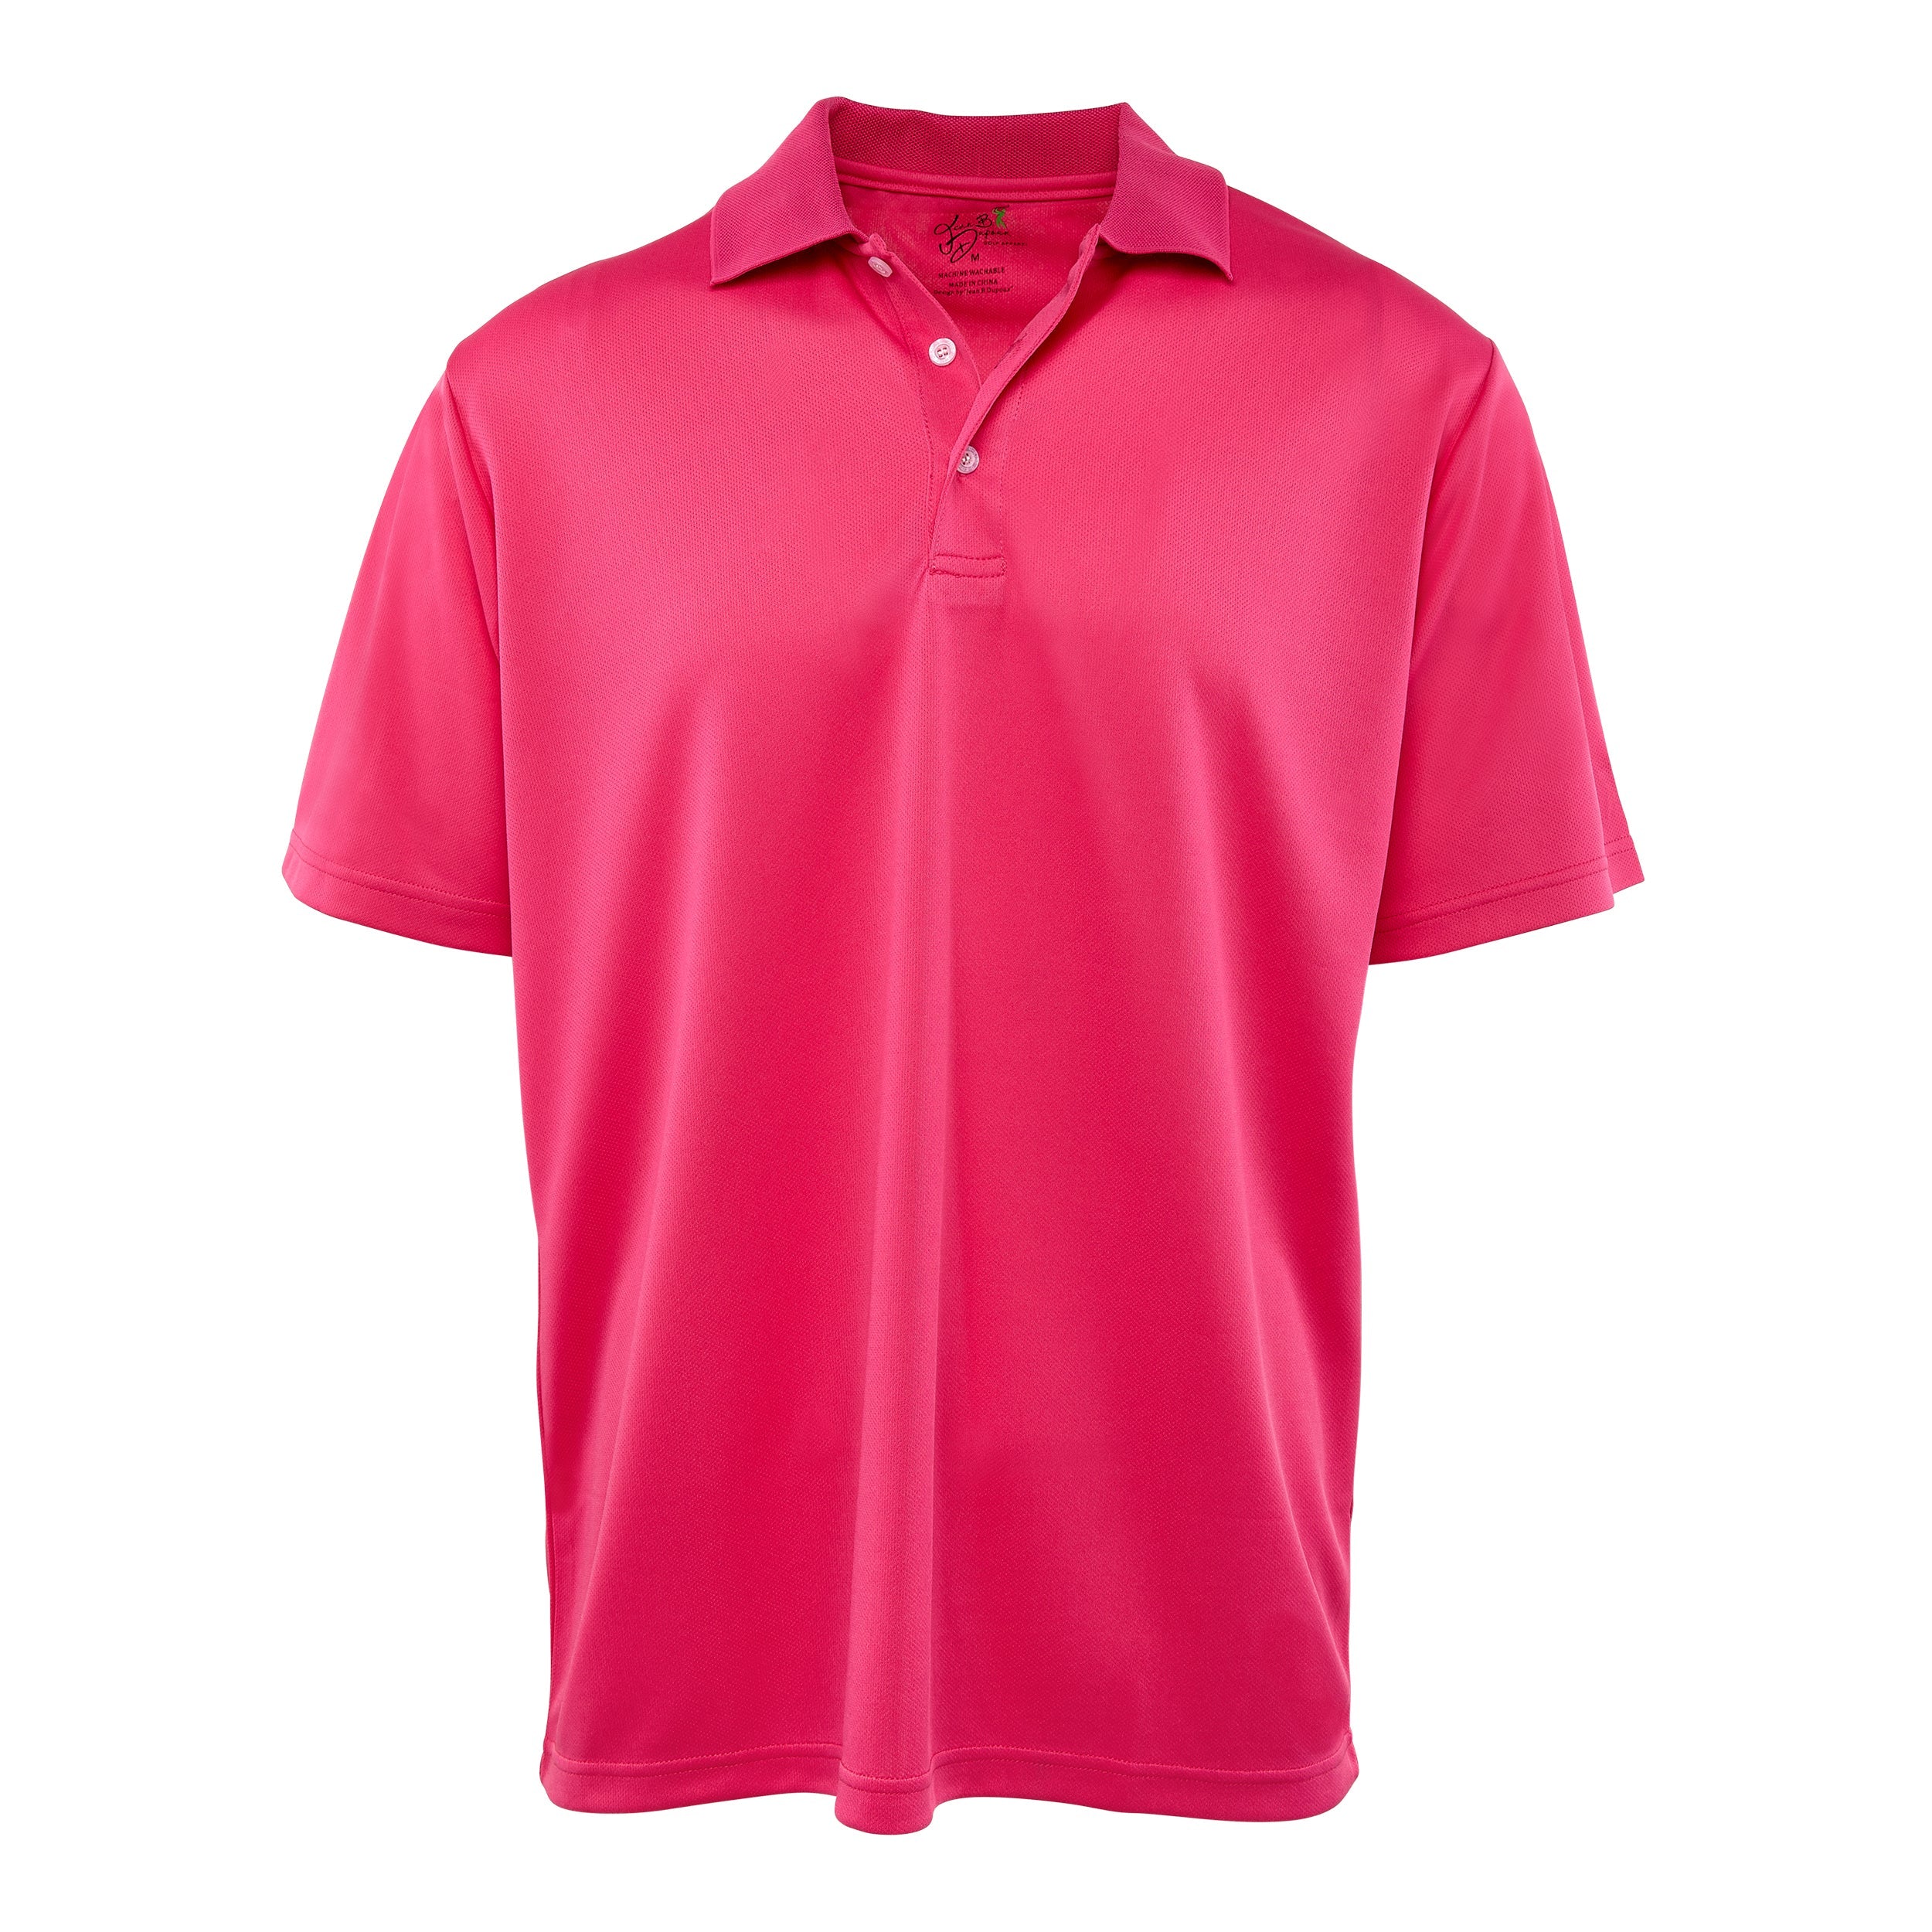 Dri-FIT Golf Shirts - Men’s Solid Bold Standard Fit Short Sleeve Golf Shirt - mygolfshirts.com